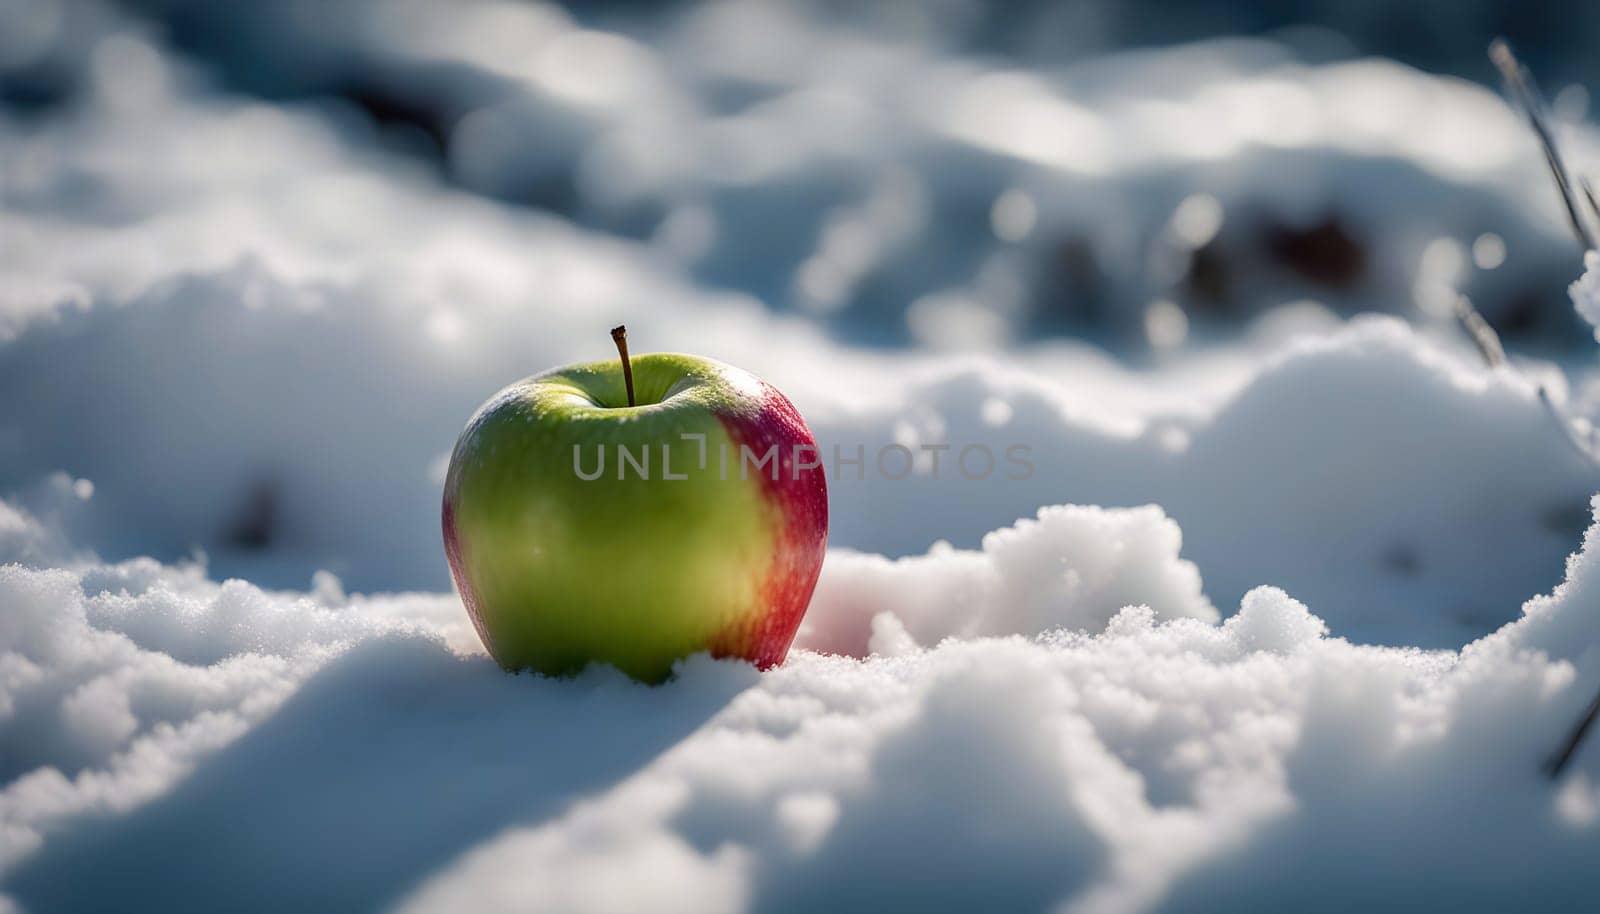 Apple on Snowy Ground by rostik924